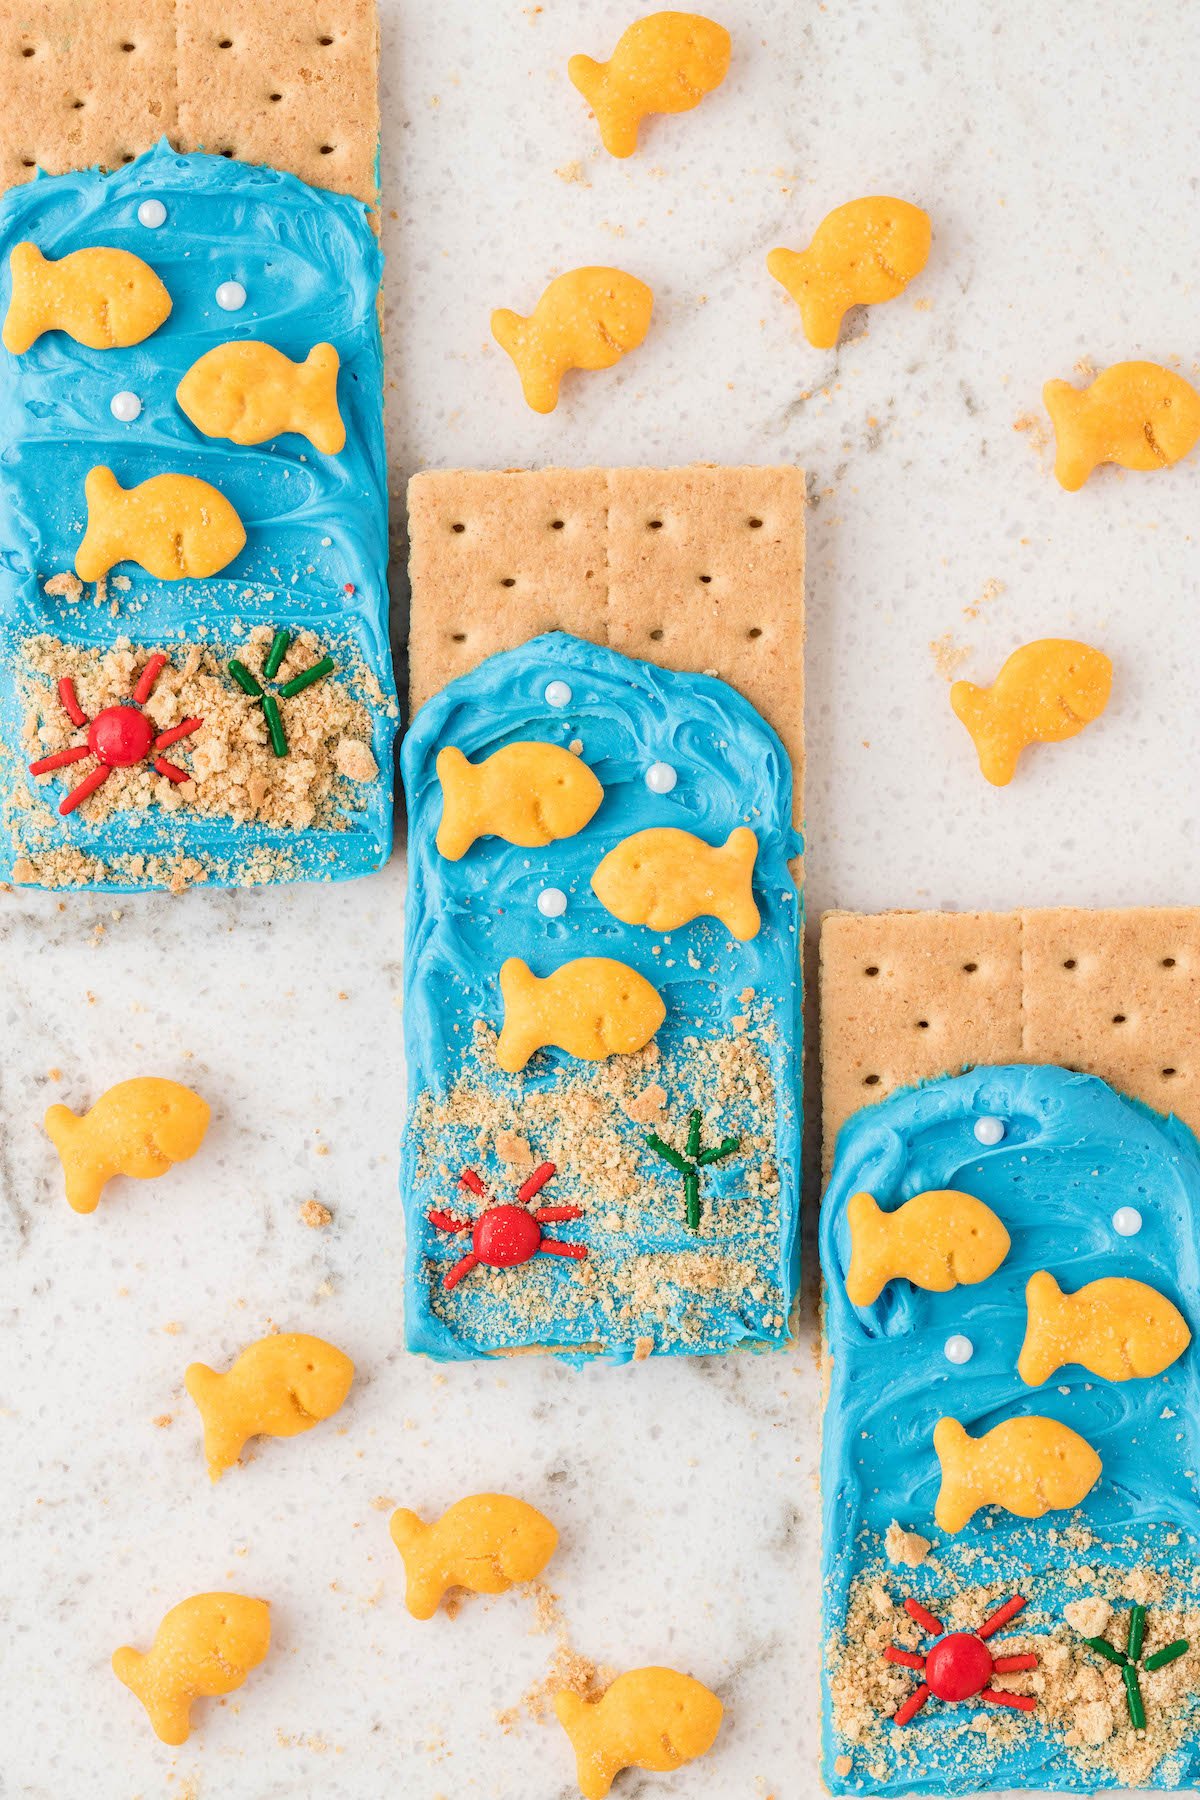 ocean graham crackers with goldfish crackers surrounding them